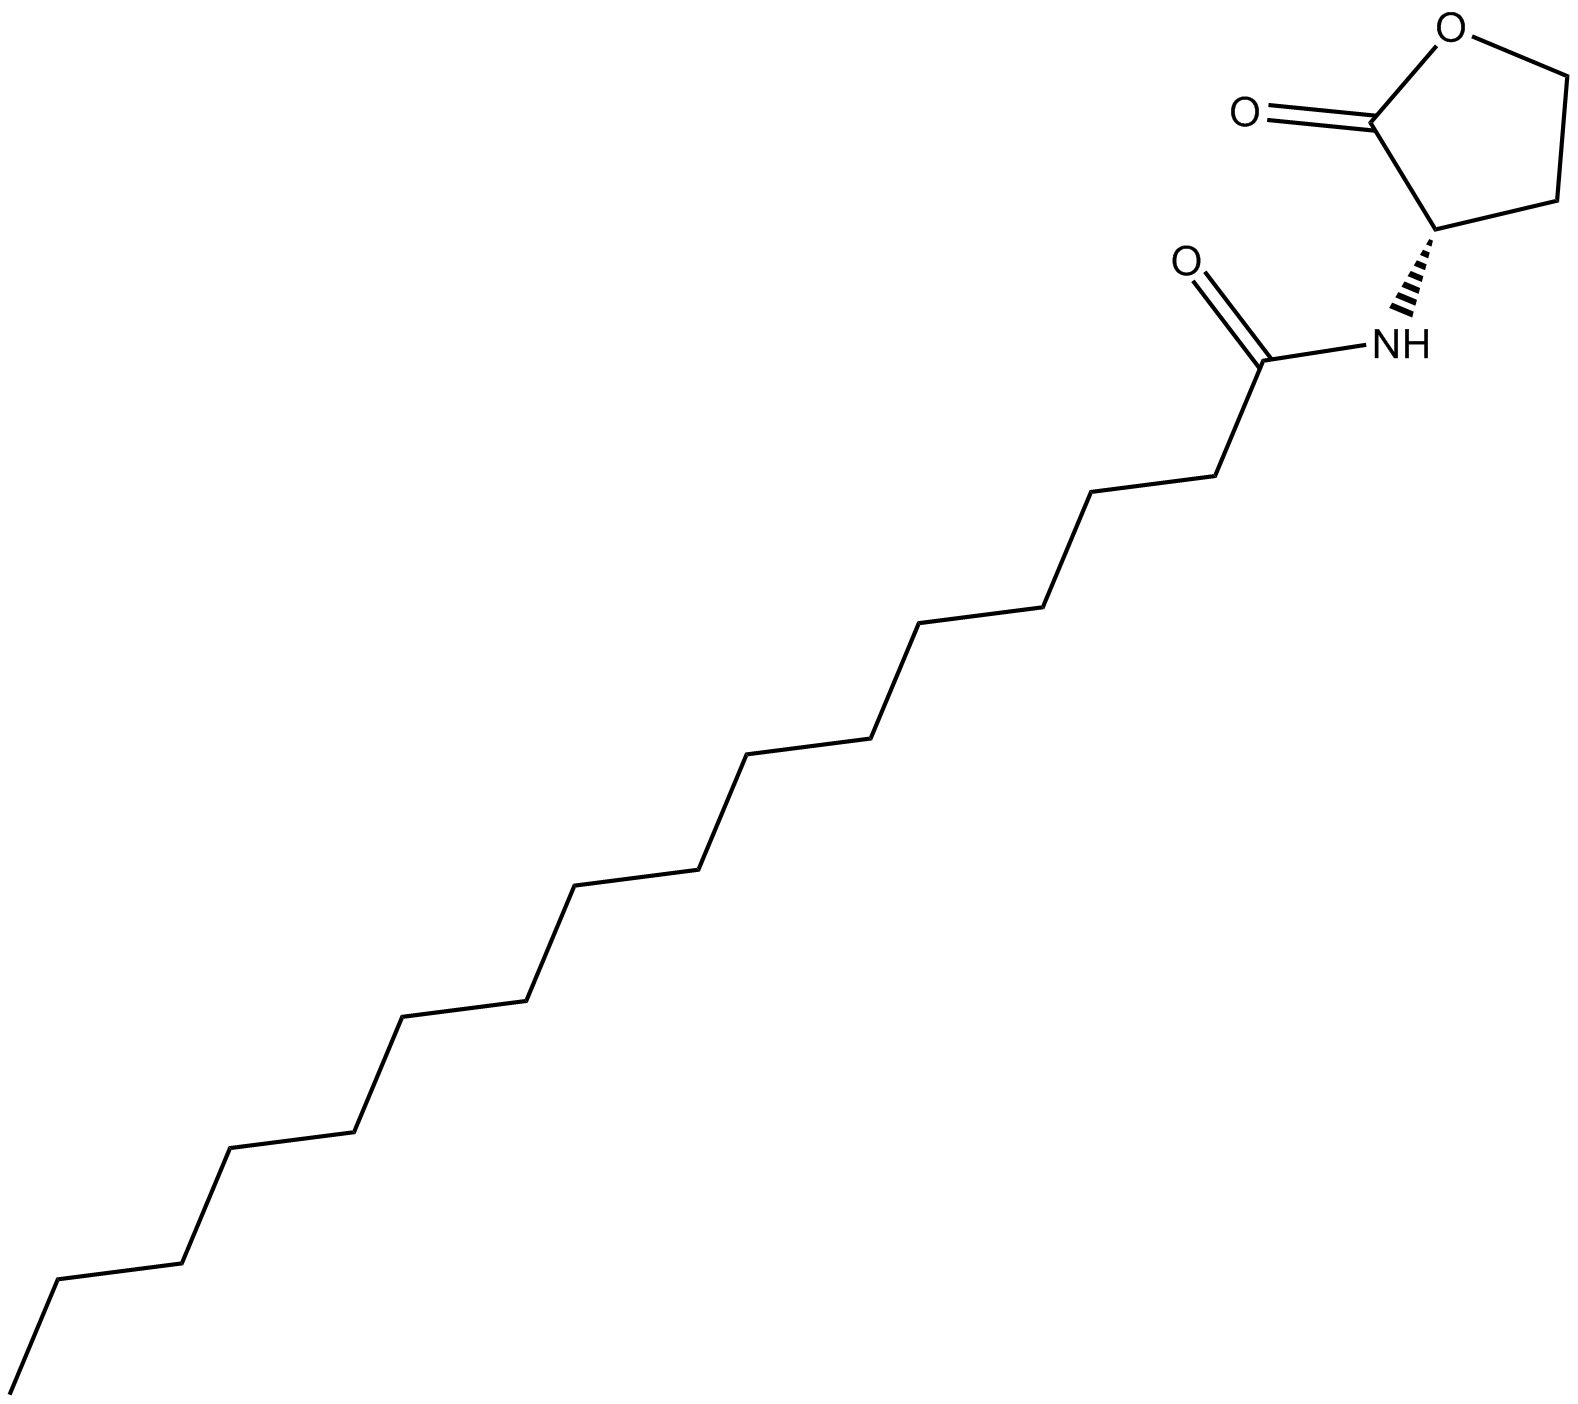 N-hexadecanoyl-L-Homoserine lactone